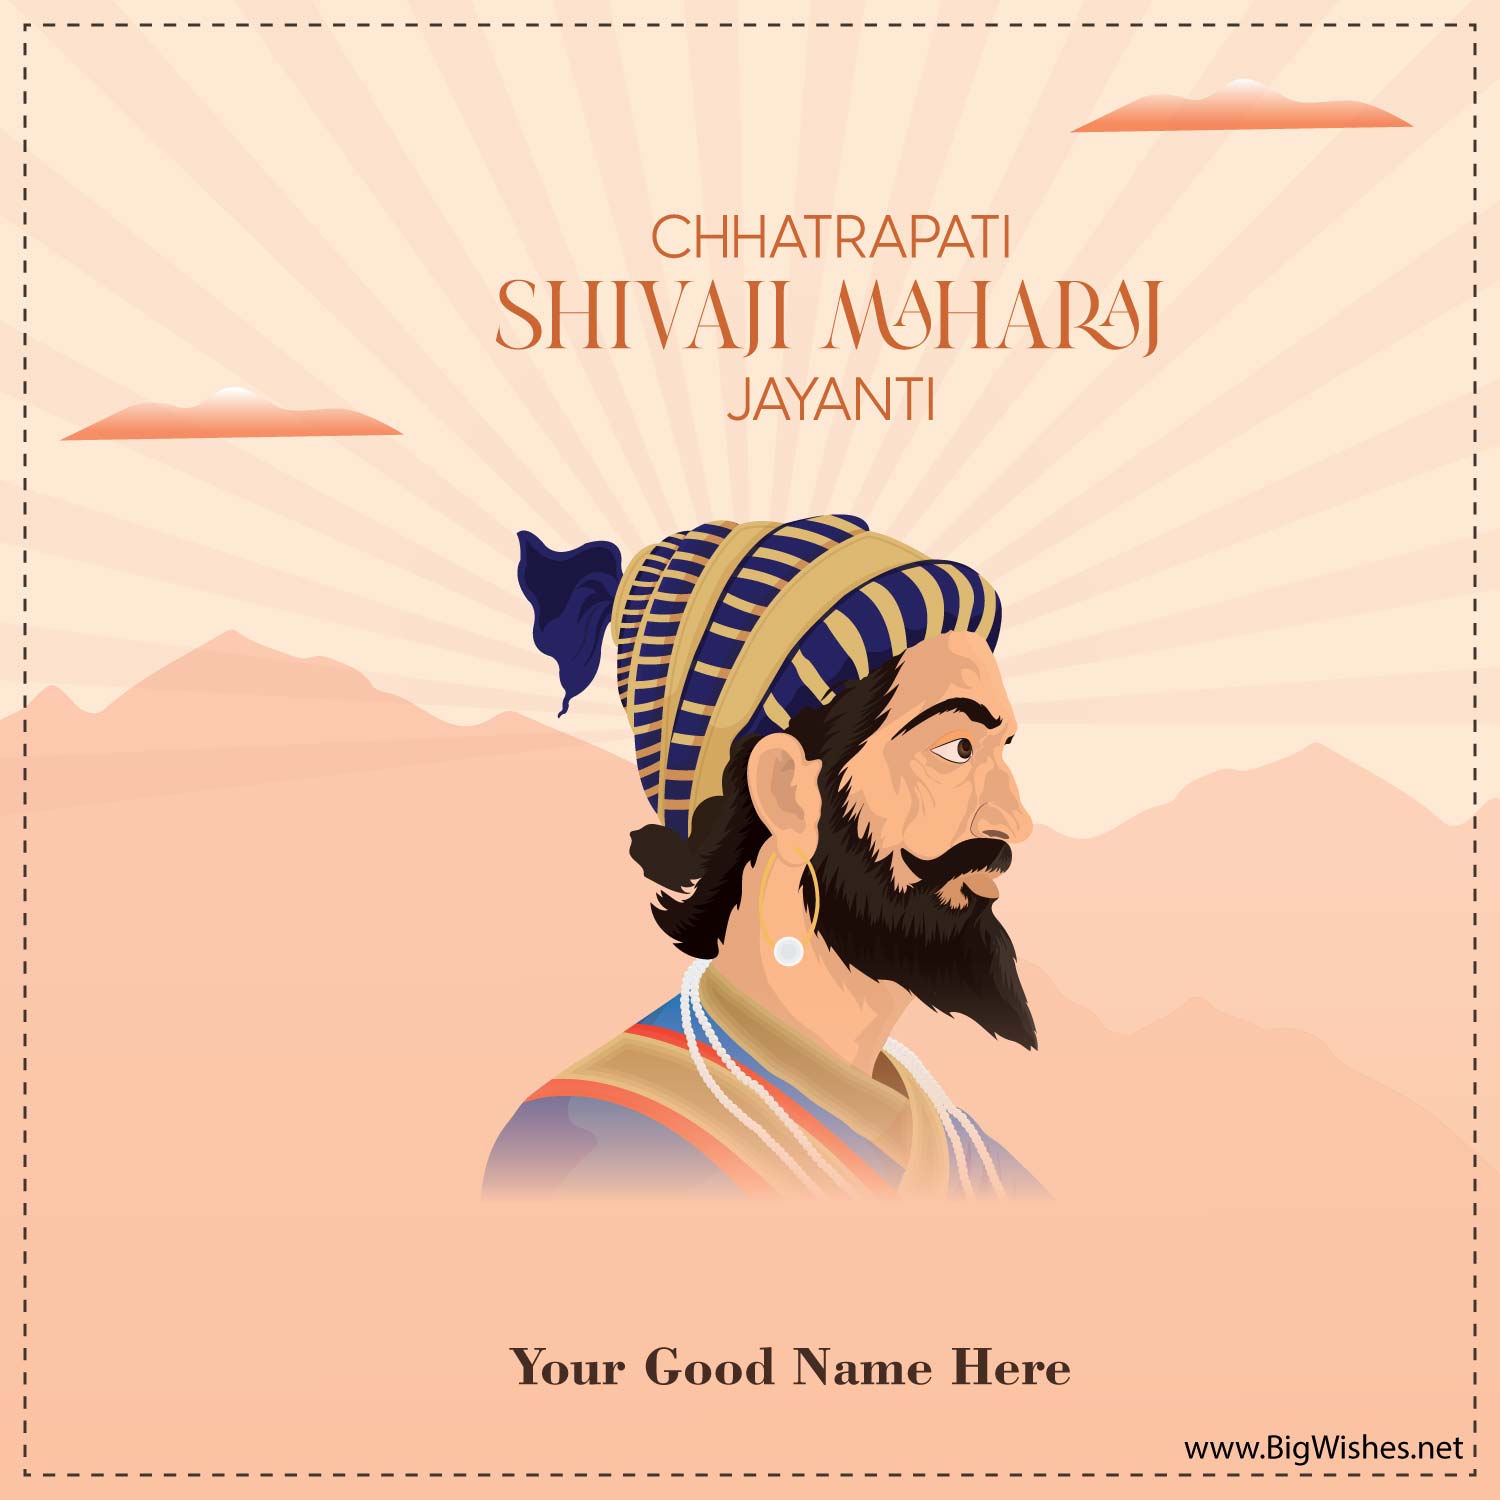 Chhatrapati Shivaji Maharaj Jayanti Images & Wishes Cards